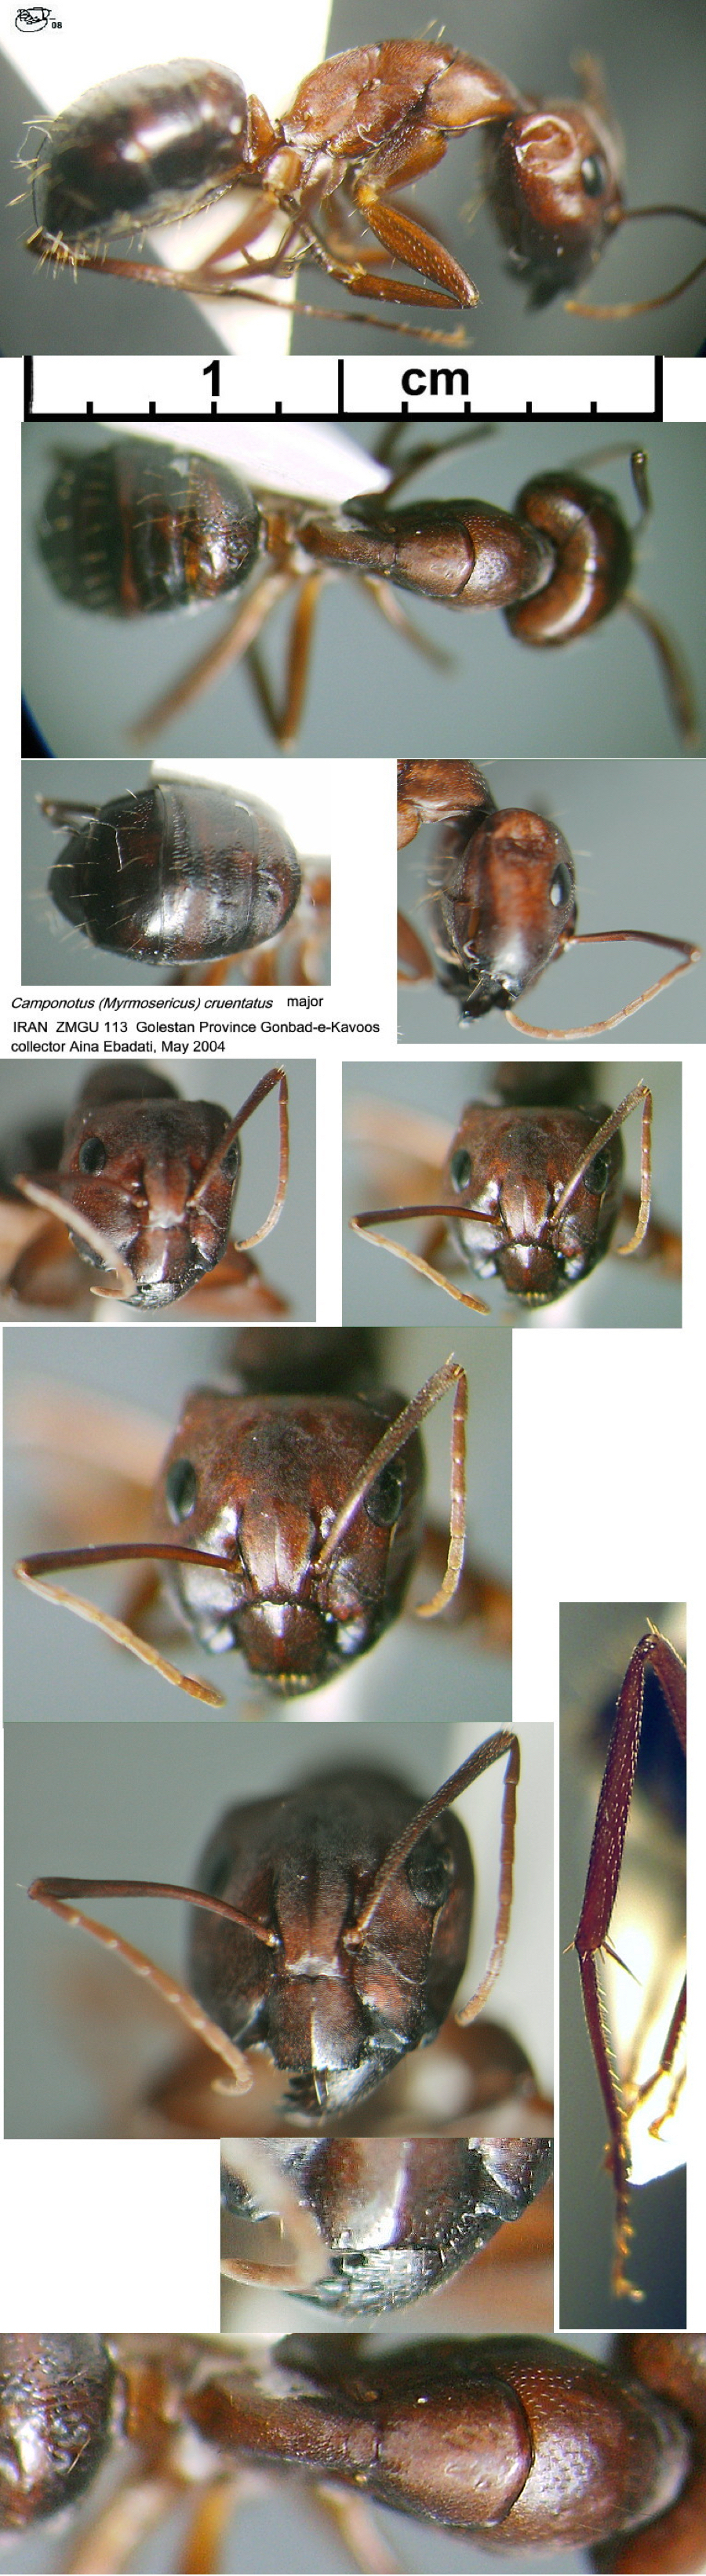 {Camponotus (Tanemyrmex) aethiops concava}